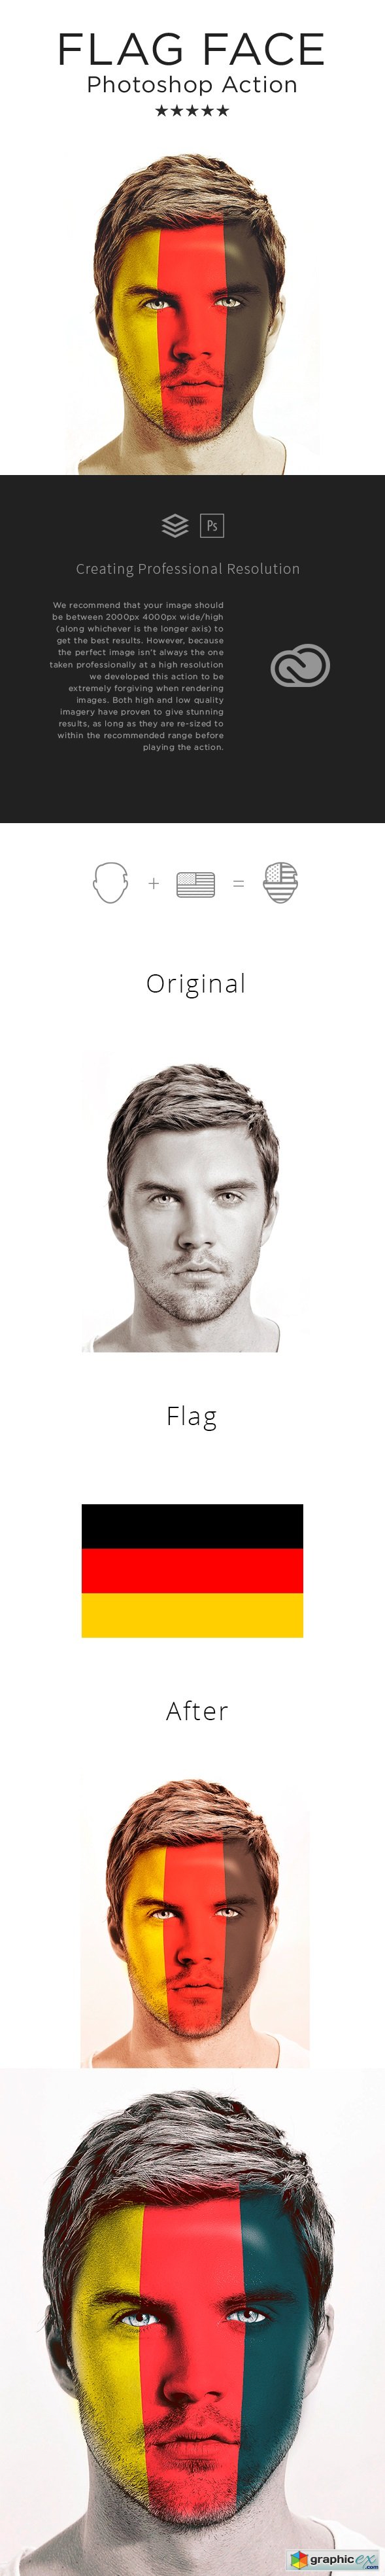 Flag Face Photoshop Action